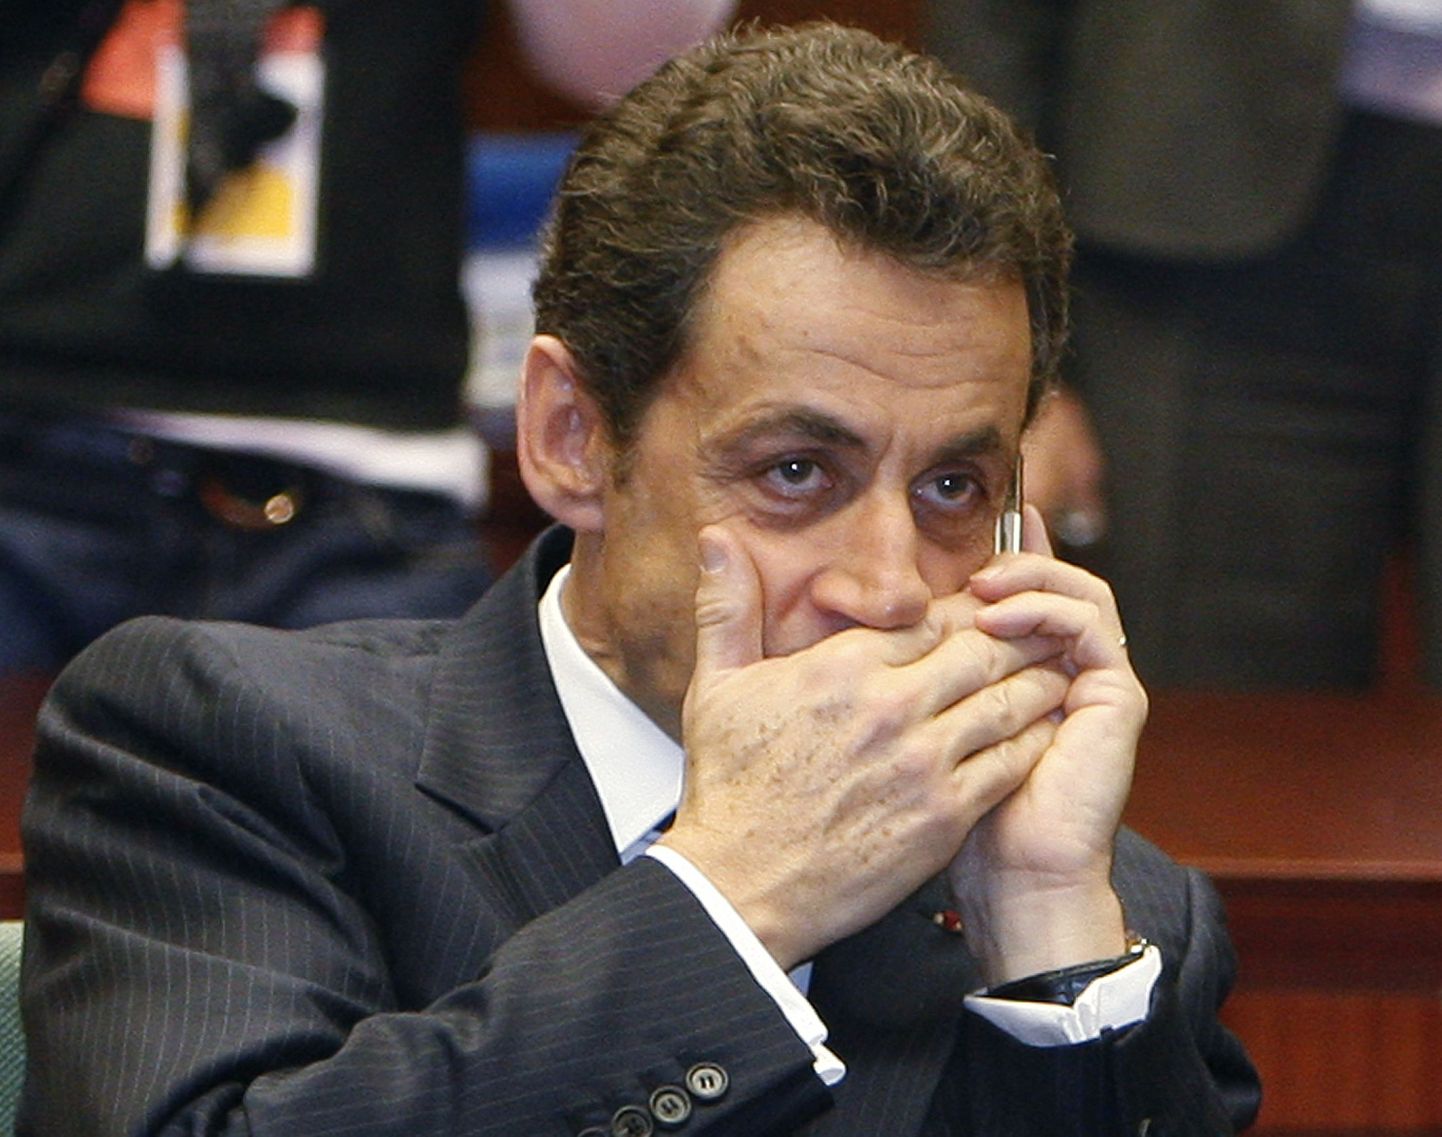 Prantsuse ekspresident Nicolas Sarkozy.